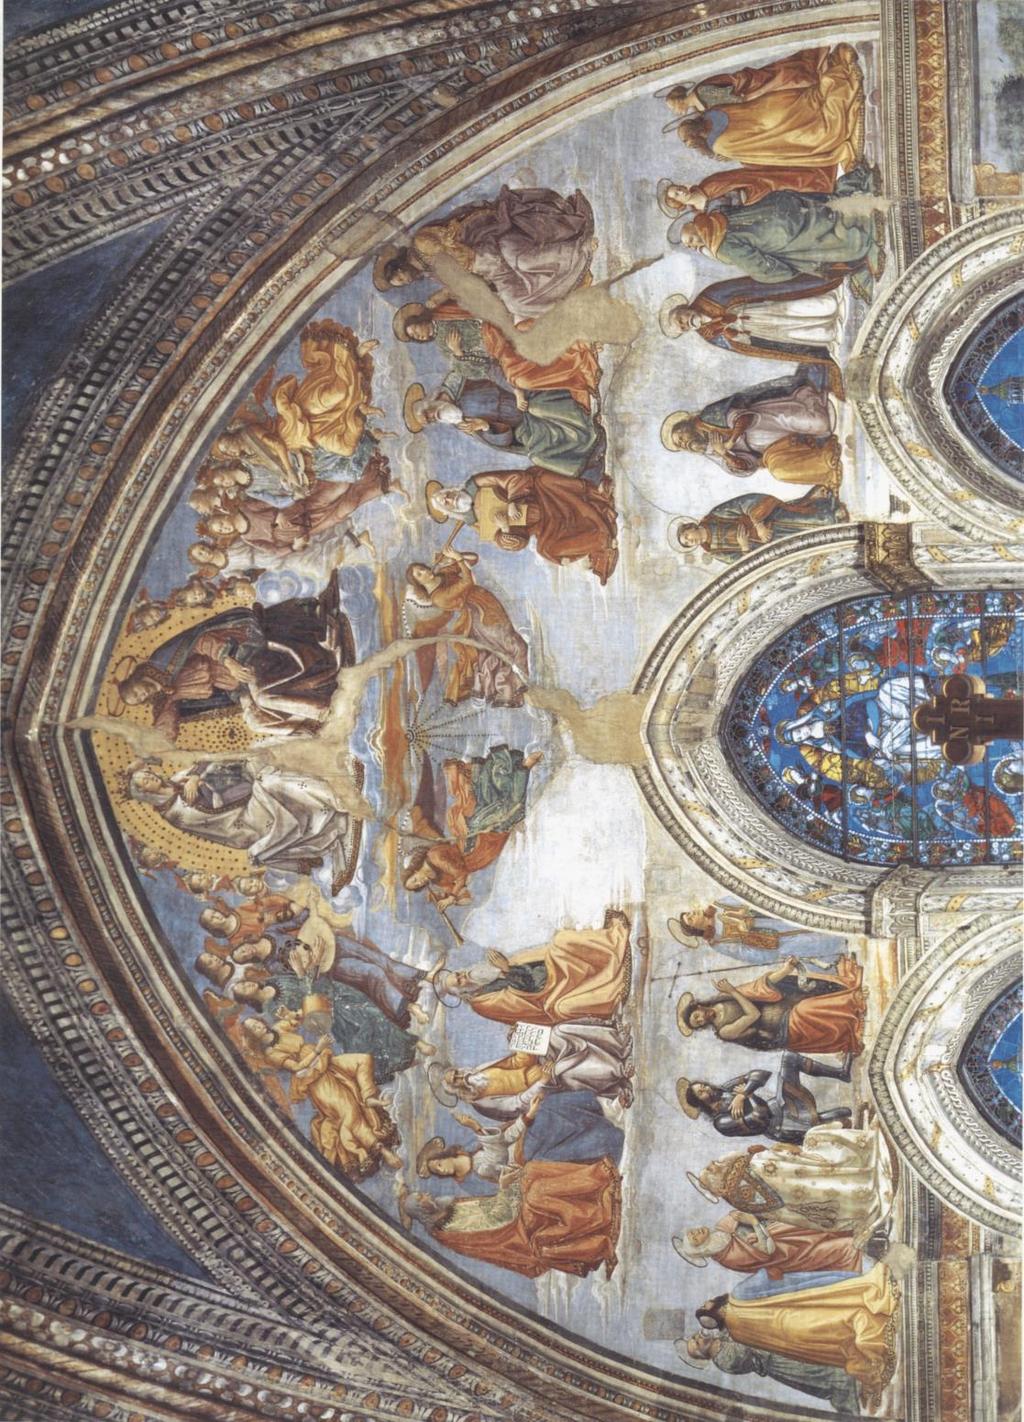 Plate 37: Domenico Bigordi called Ghirlandaio, and workshop, Coronation of the Virgin, lunette of